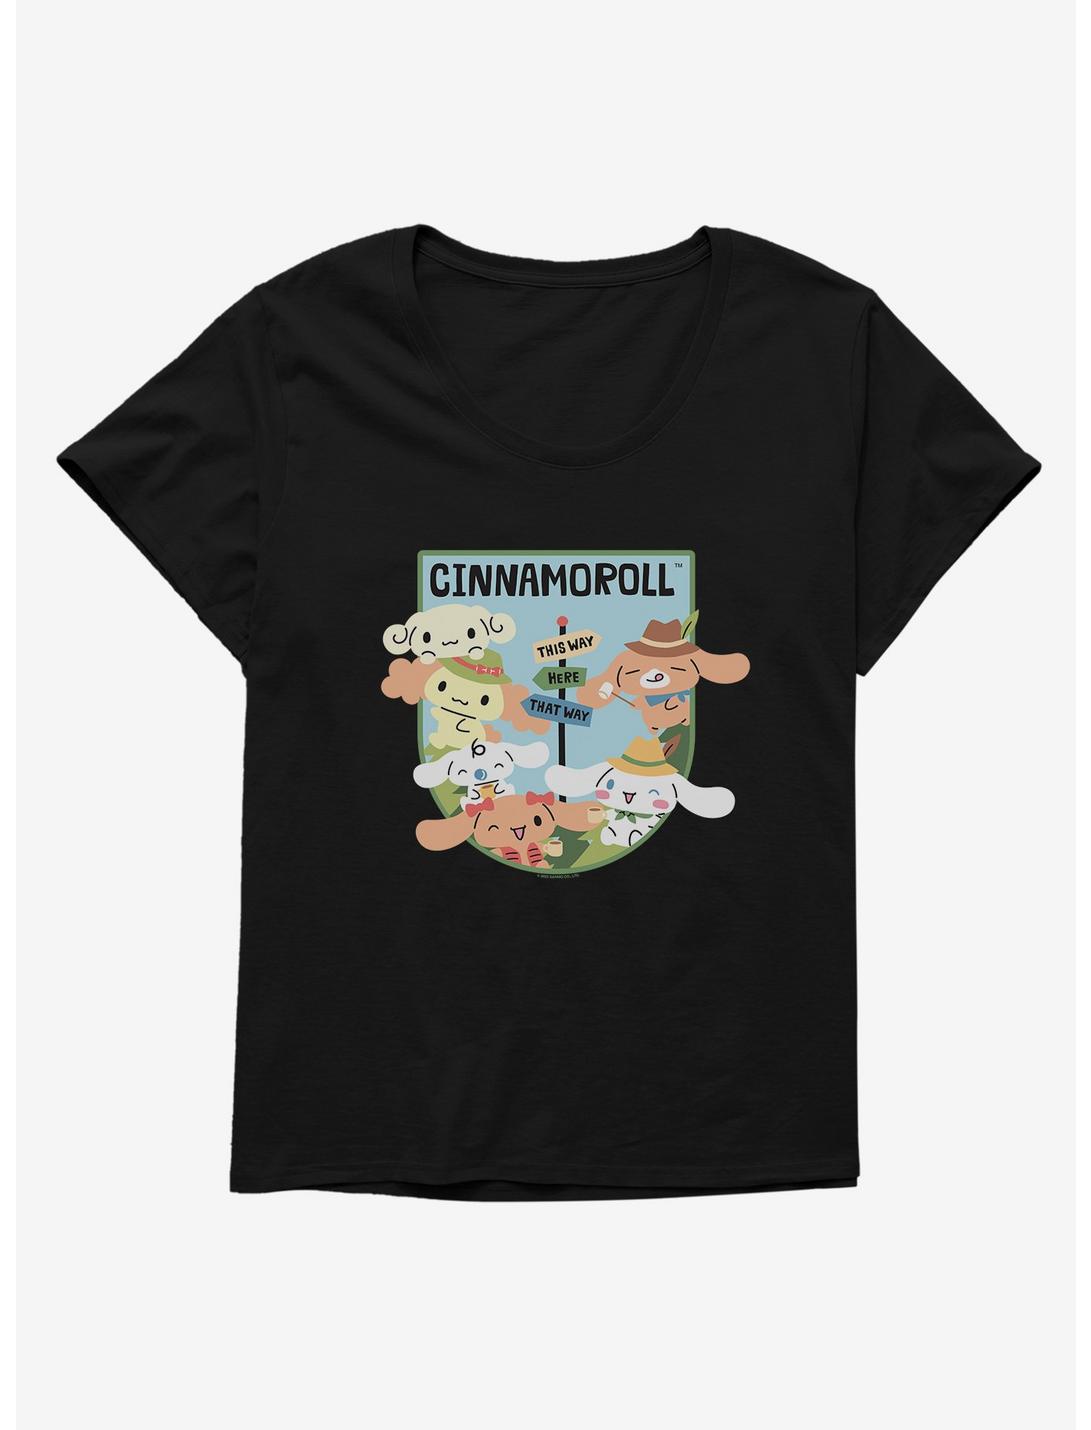 Cinnamoroll This Way Here That Way Womens T-Shirt Plus Size, BLACK, hi-res